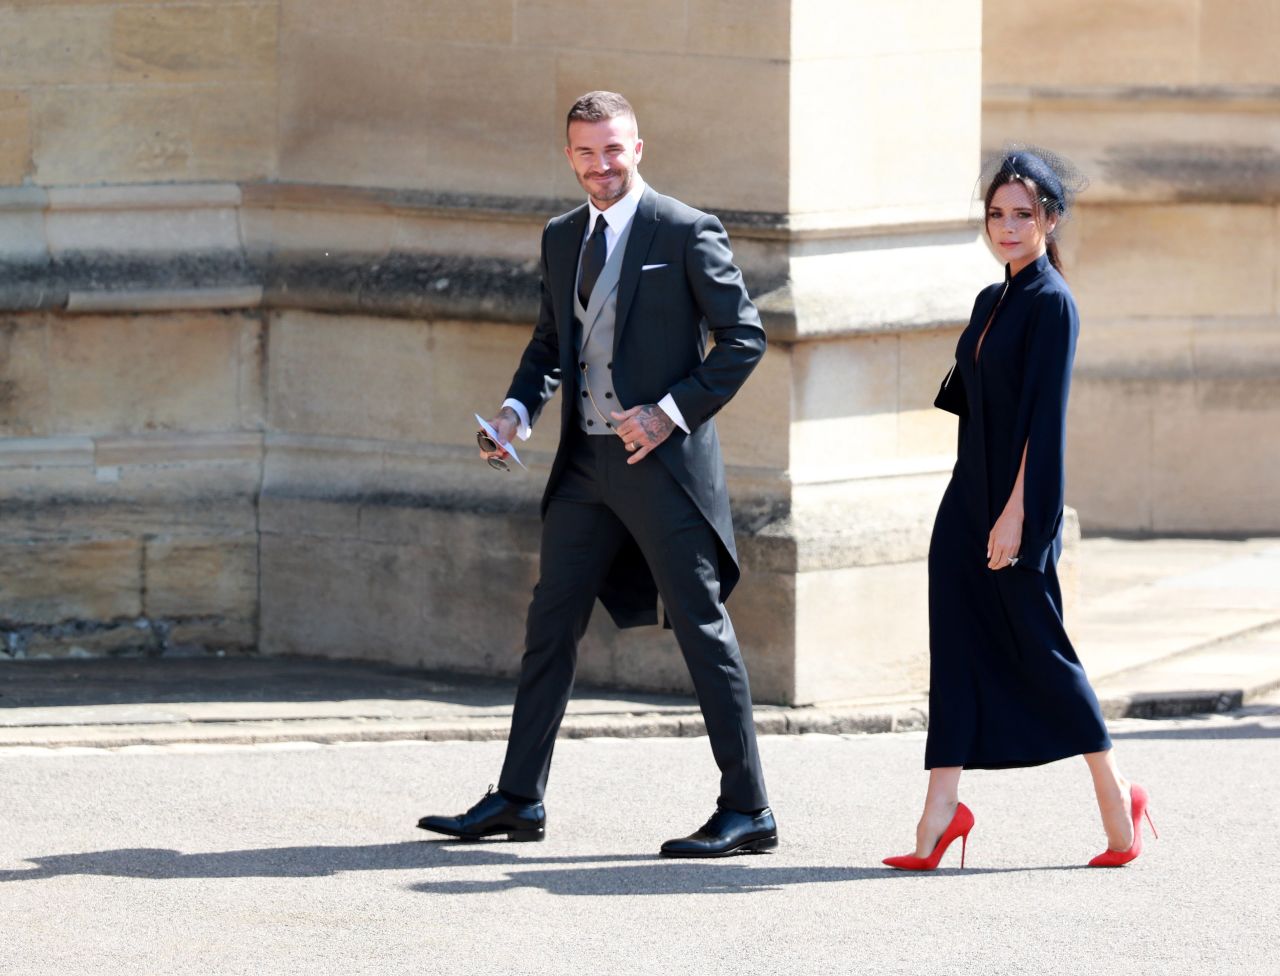 Victoria Beckham, wearing her own label, and her husband, David Beckham